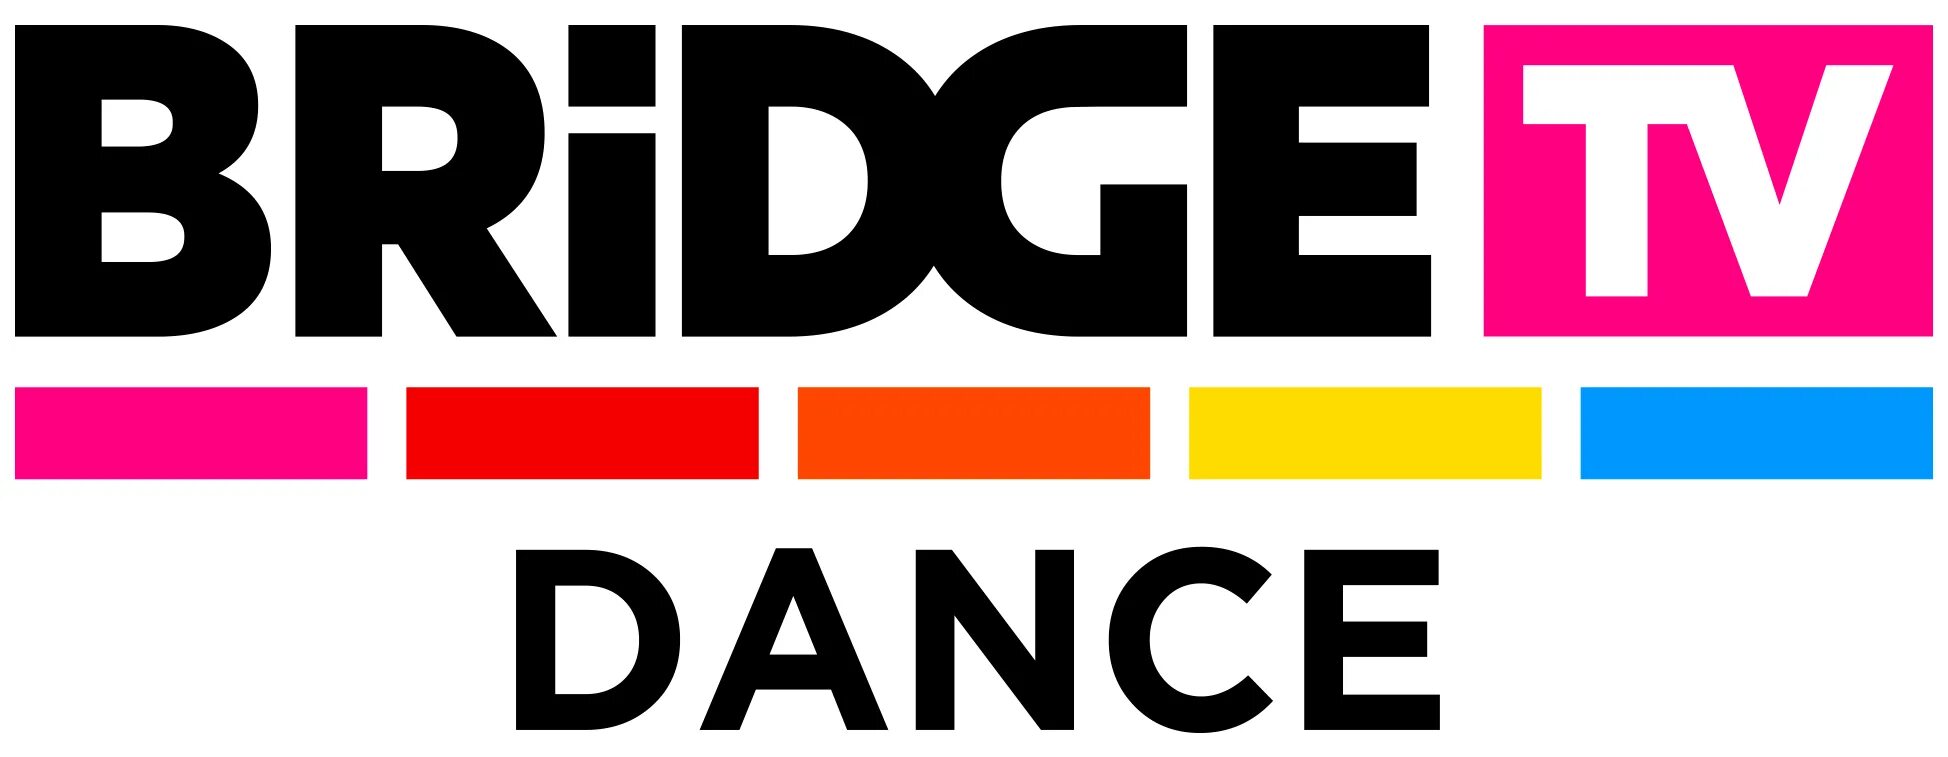 Bridge tv. Канал Bridge TV. Bridge TV логотип. Логотип канала бридж ТВ. Телеканал Dange TV.